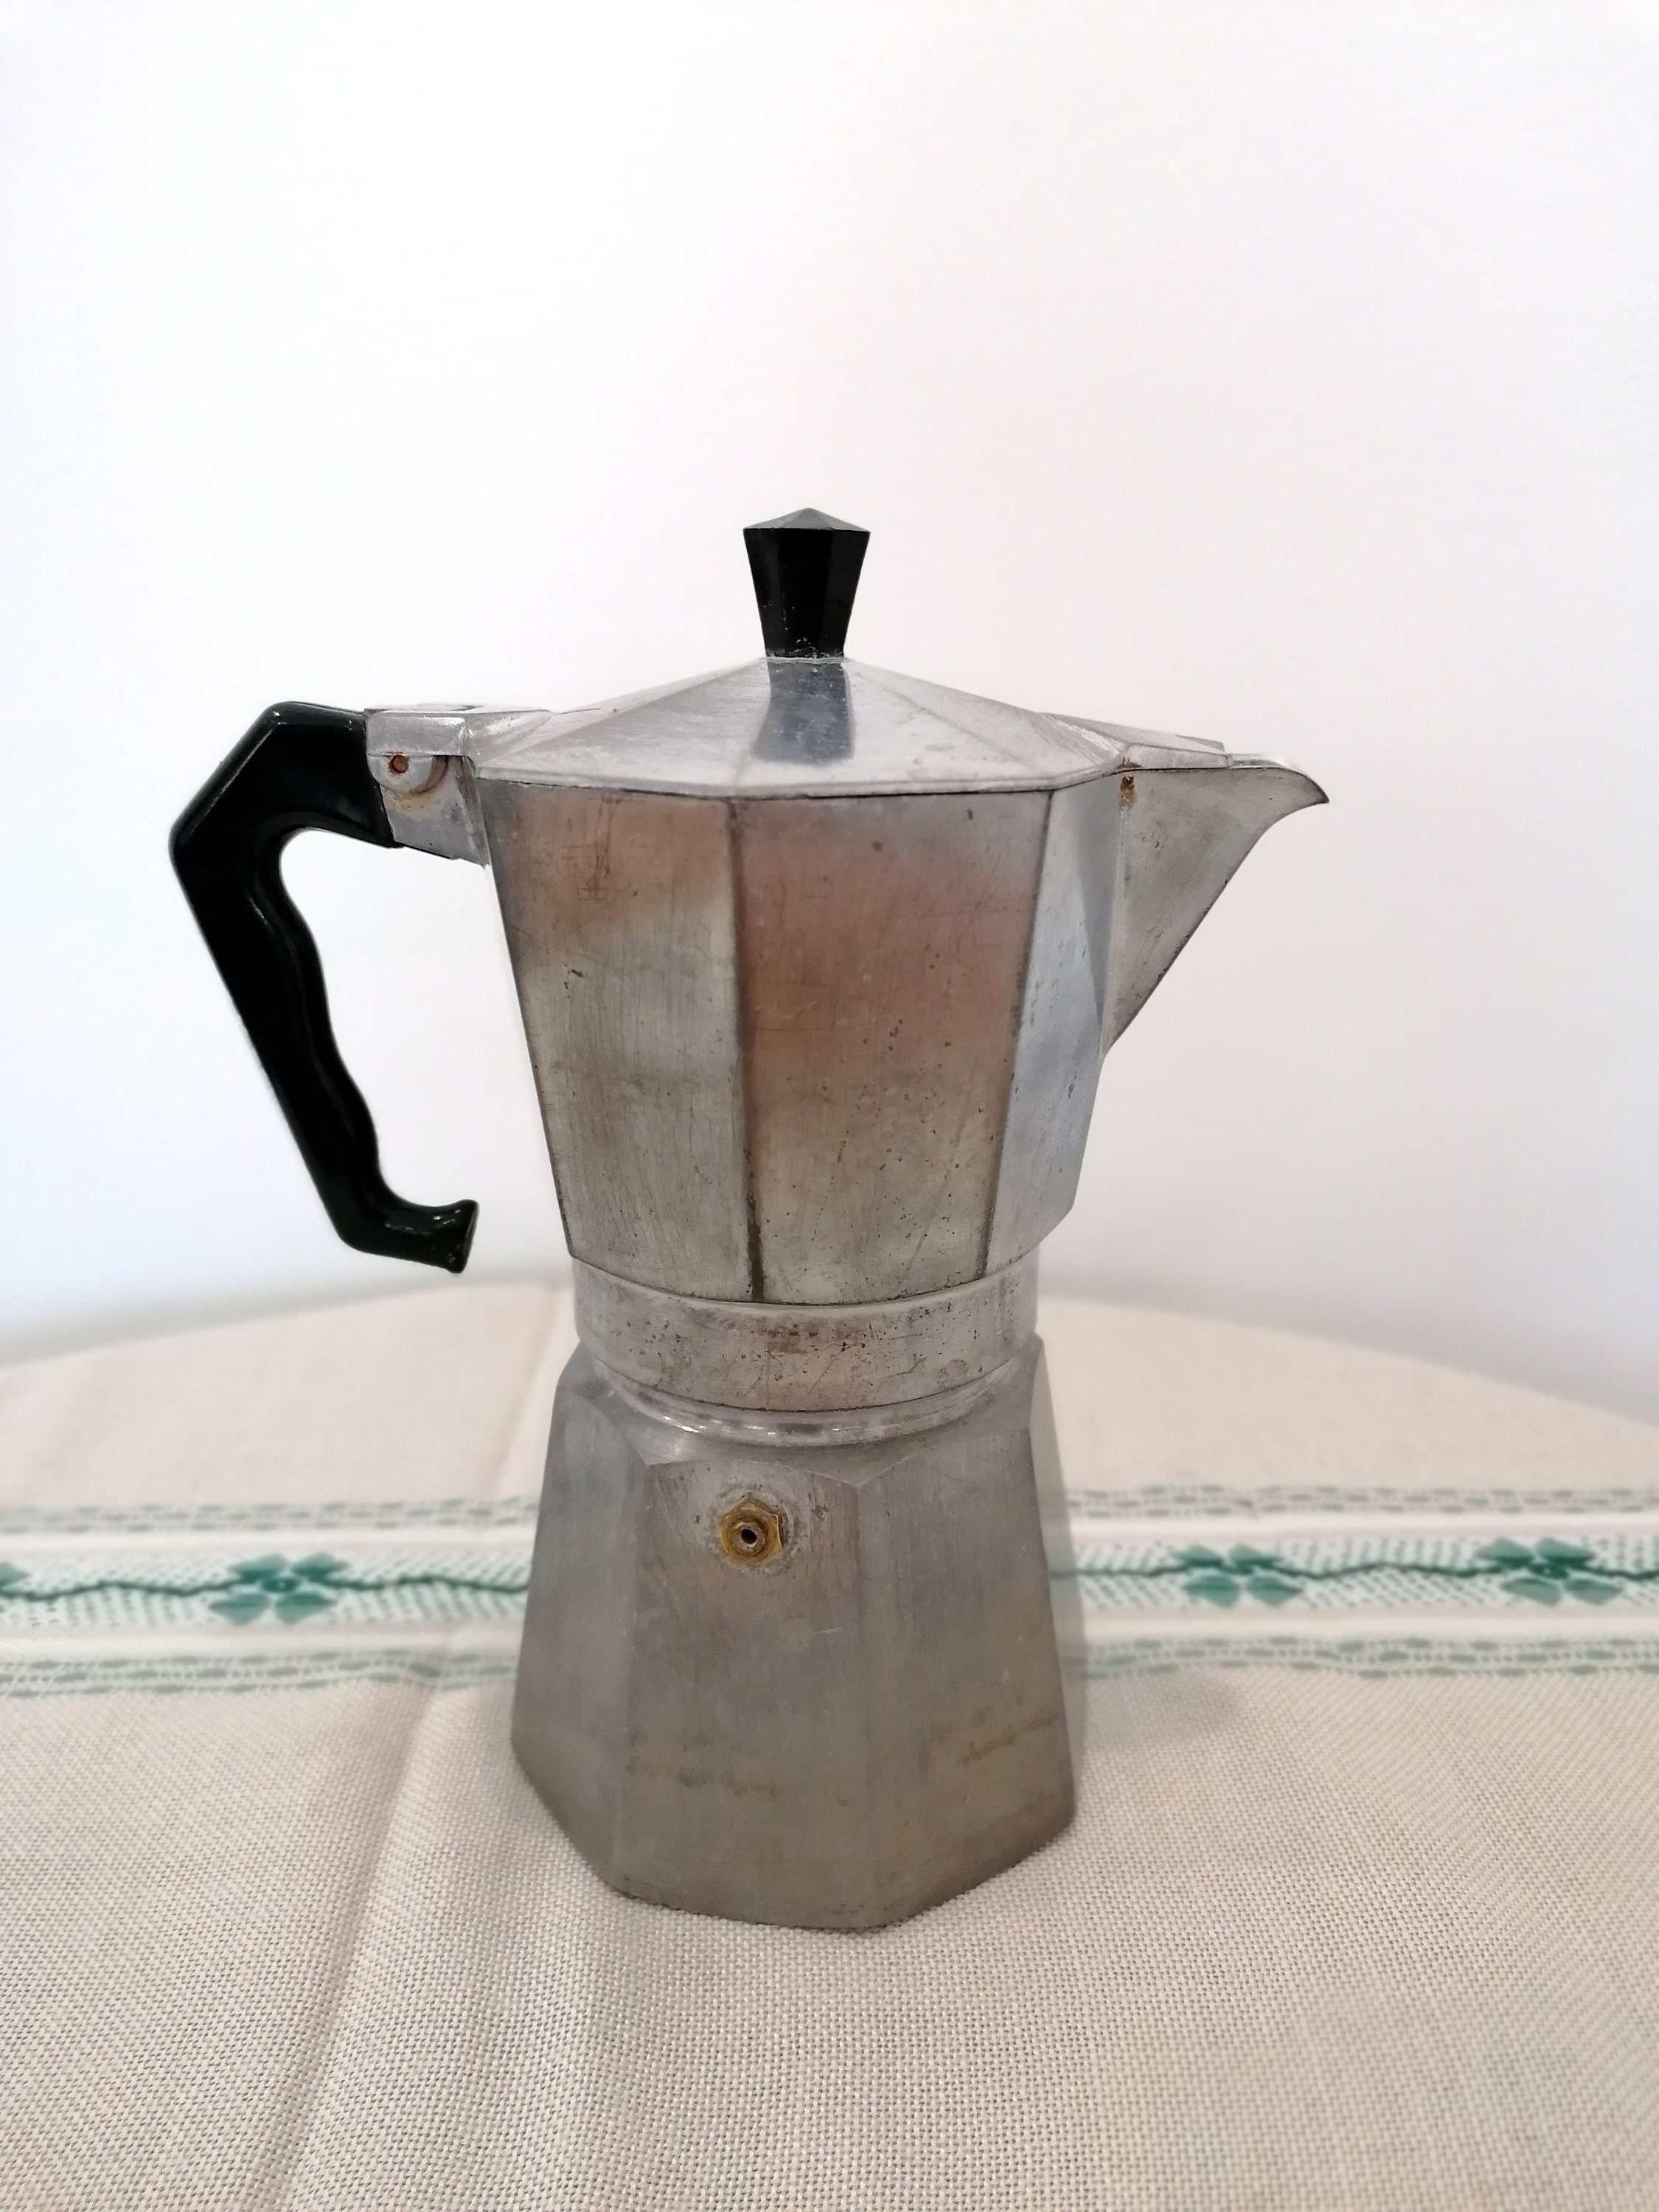 What is an italian coffee maker?